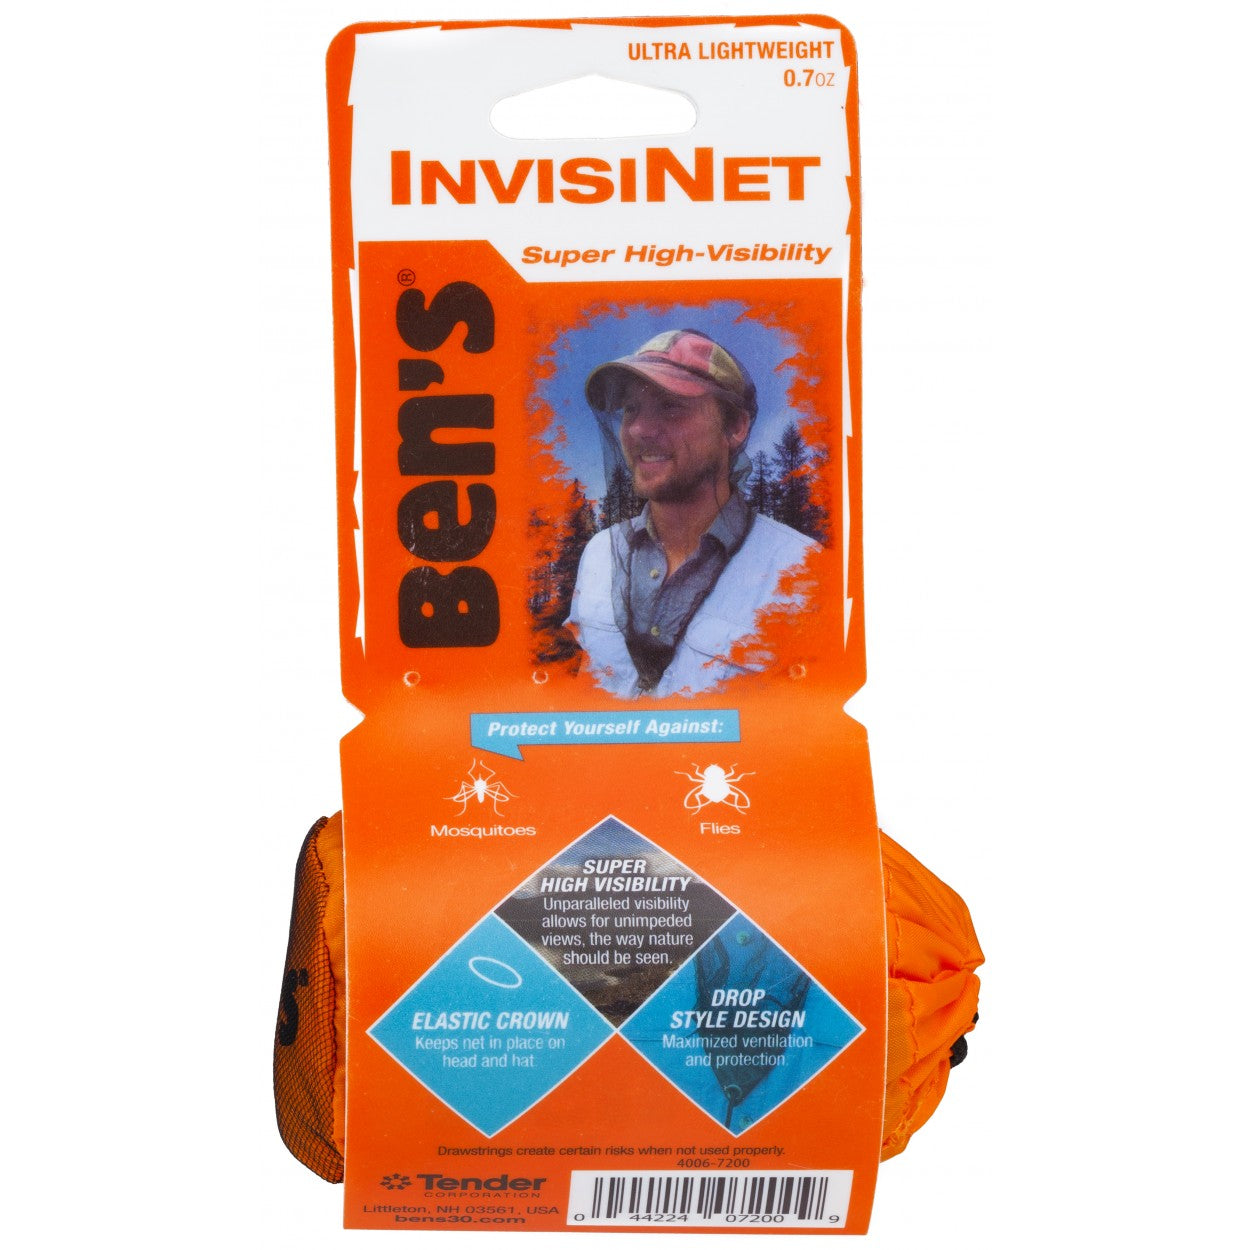 GOSSAMER GEAR Ben's InvisiNet Bug Head Net